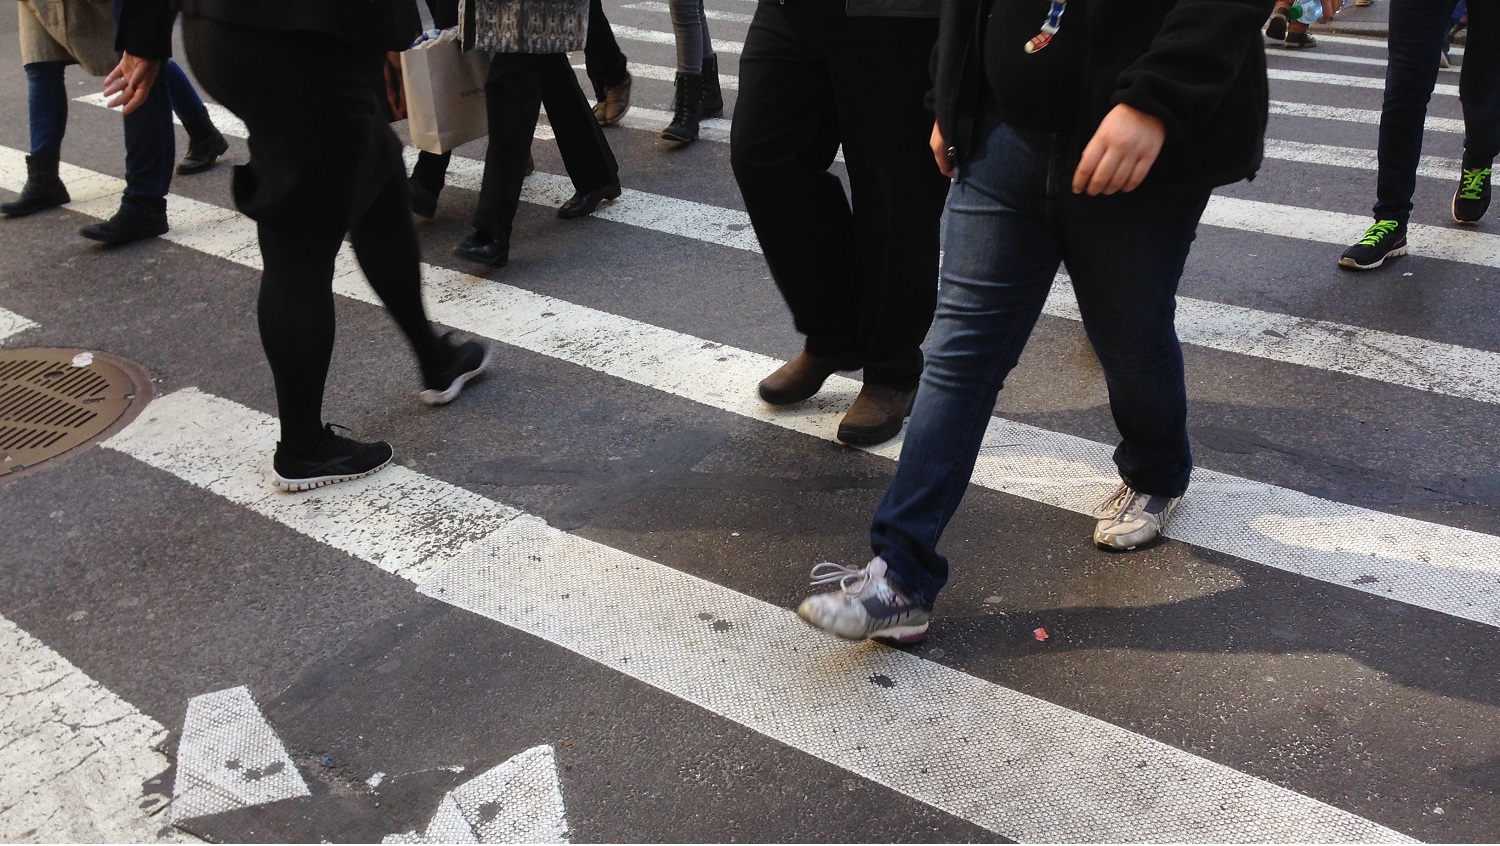 Pedestrians crossing city sidewalk